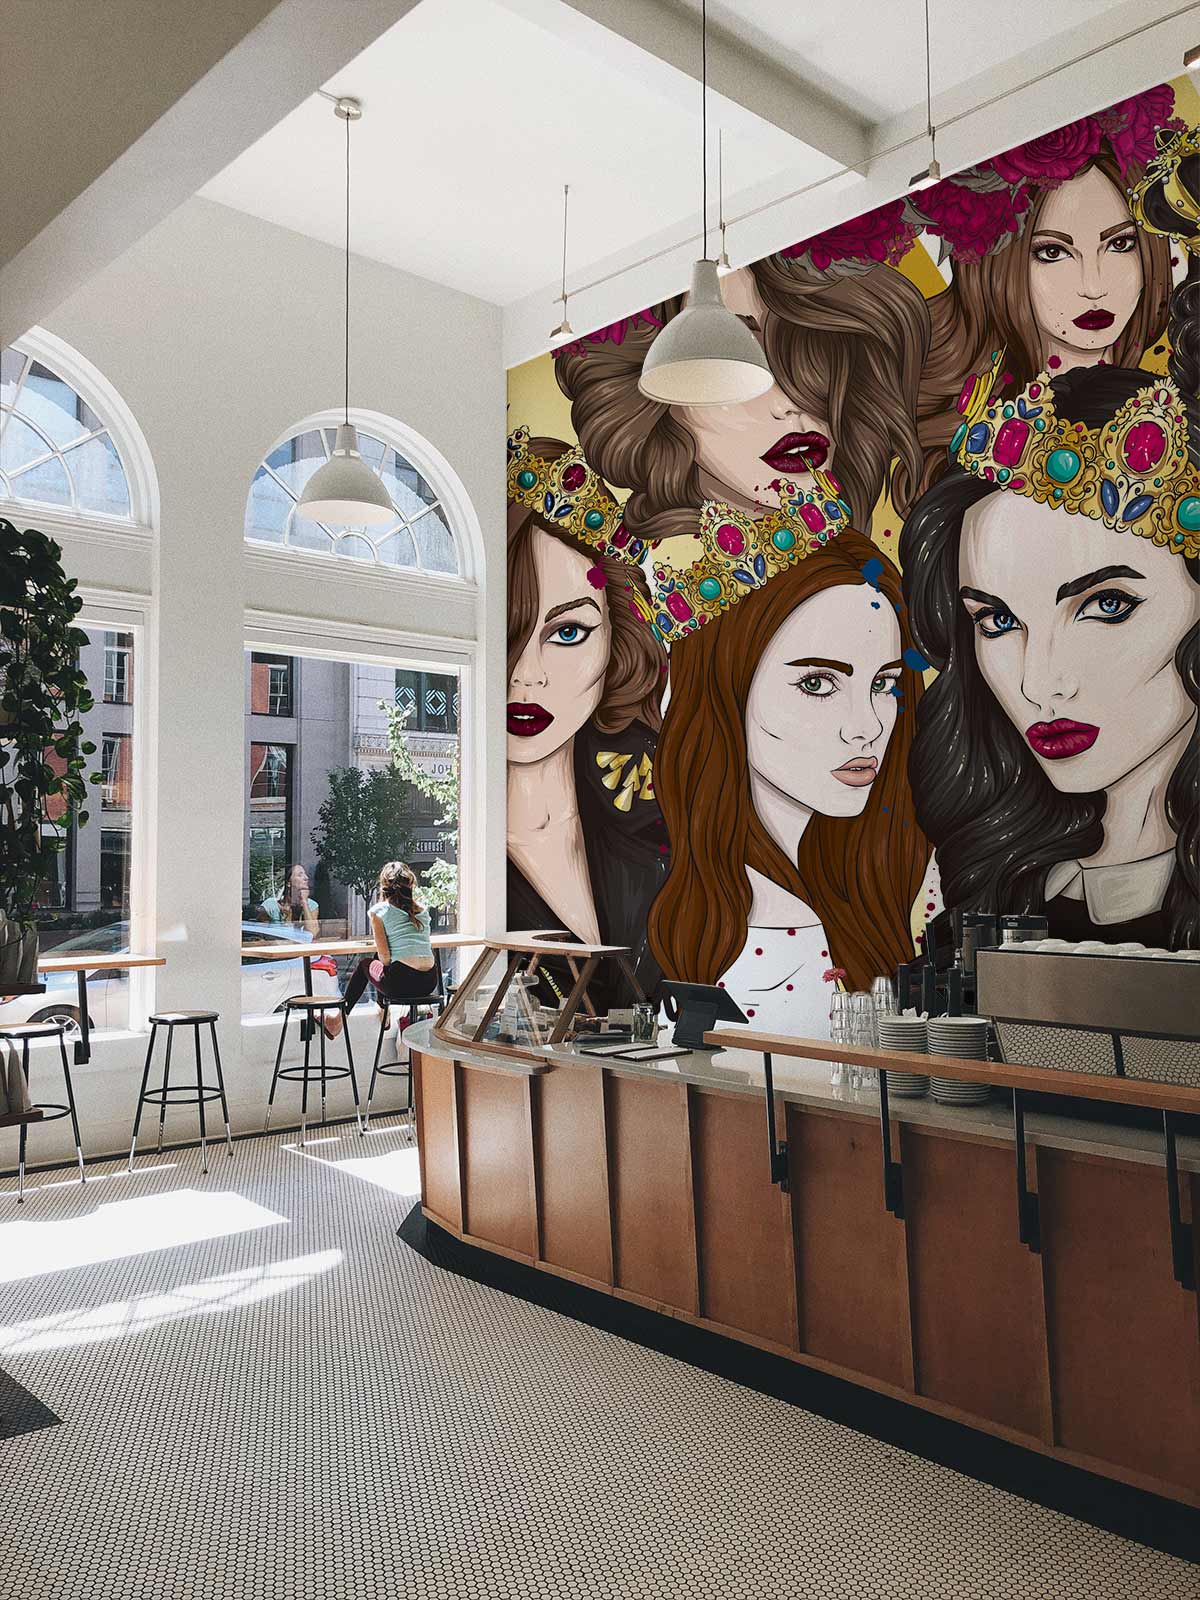 Miss World Painting Wallpaper Mural Restaurant